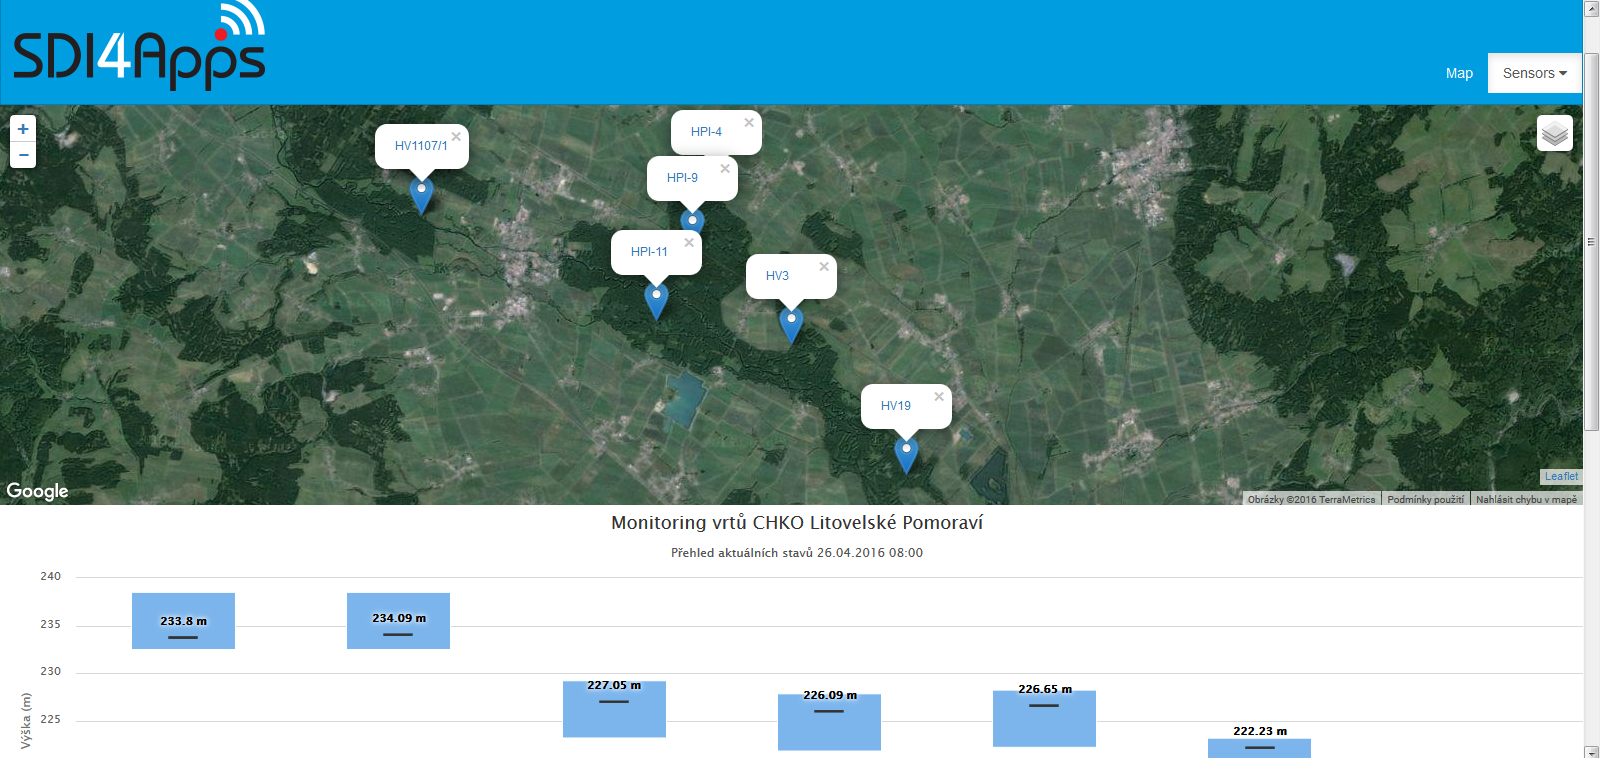 OSN: Ground water monitoring app